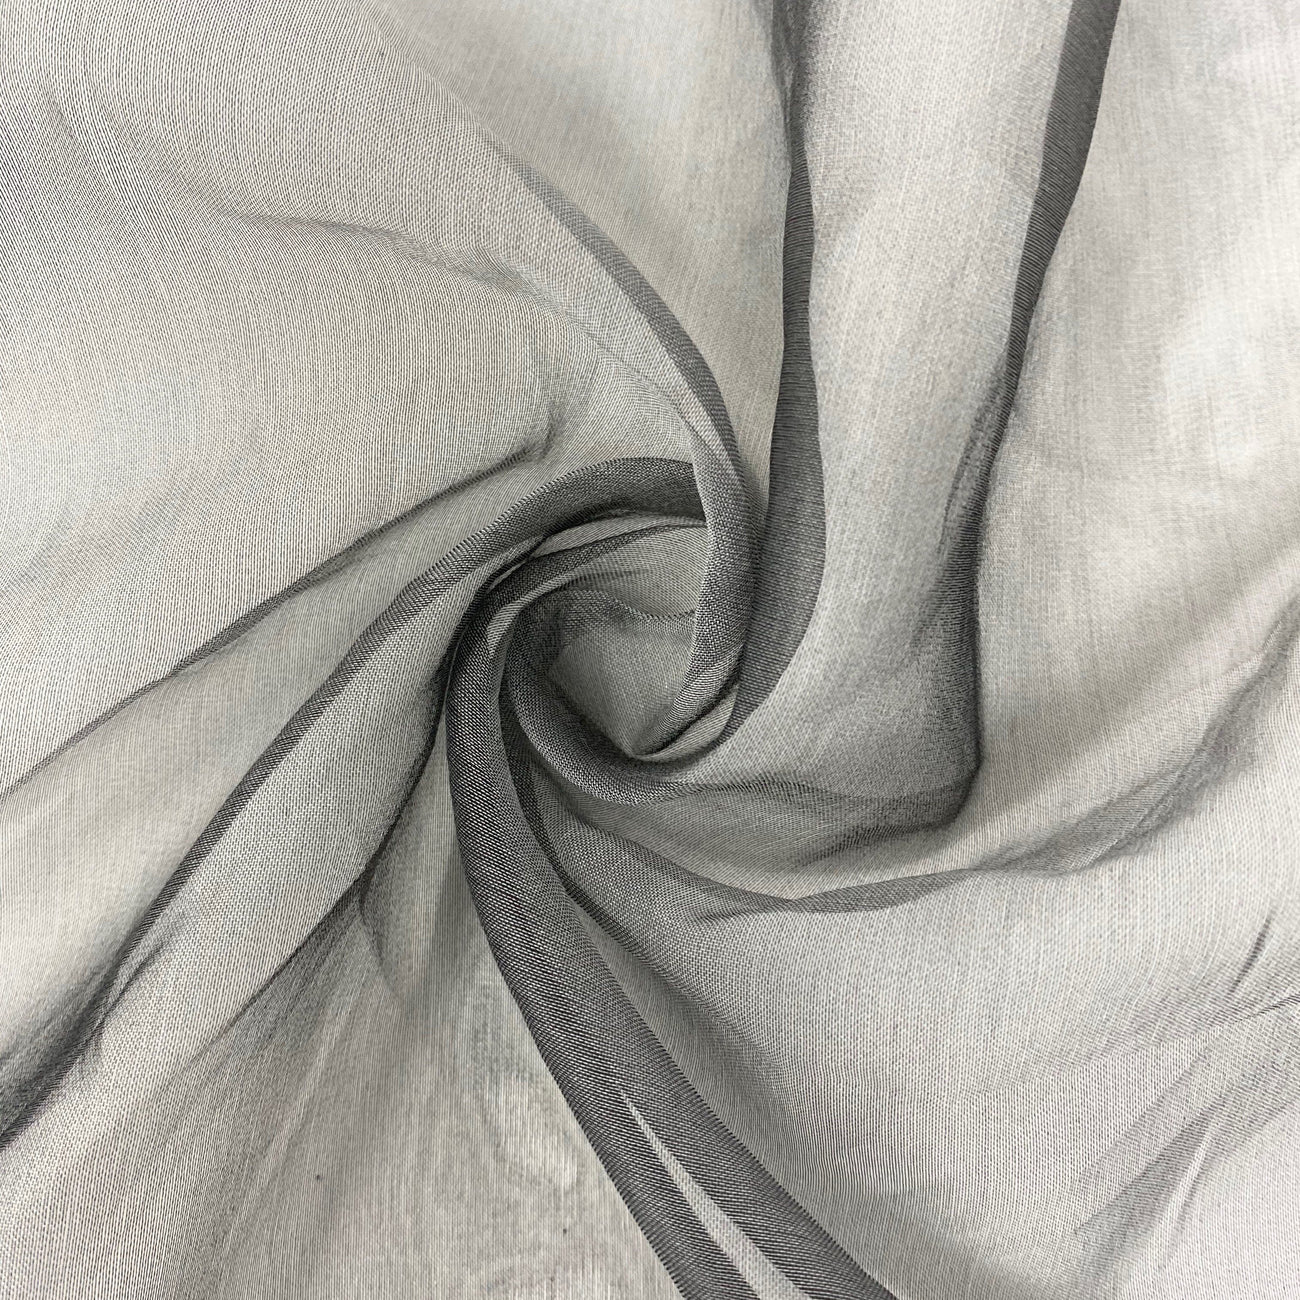 Silk Organza Sheer Fabric $3.99/Yard 44/45